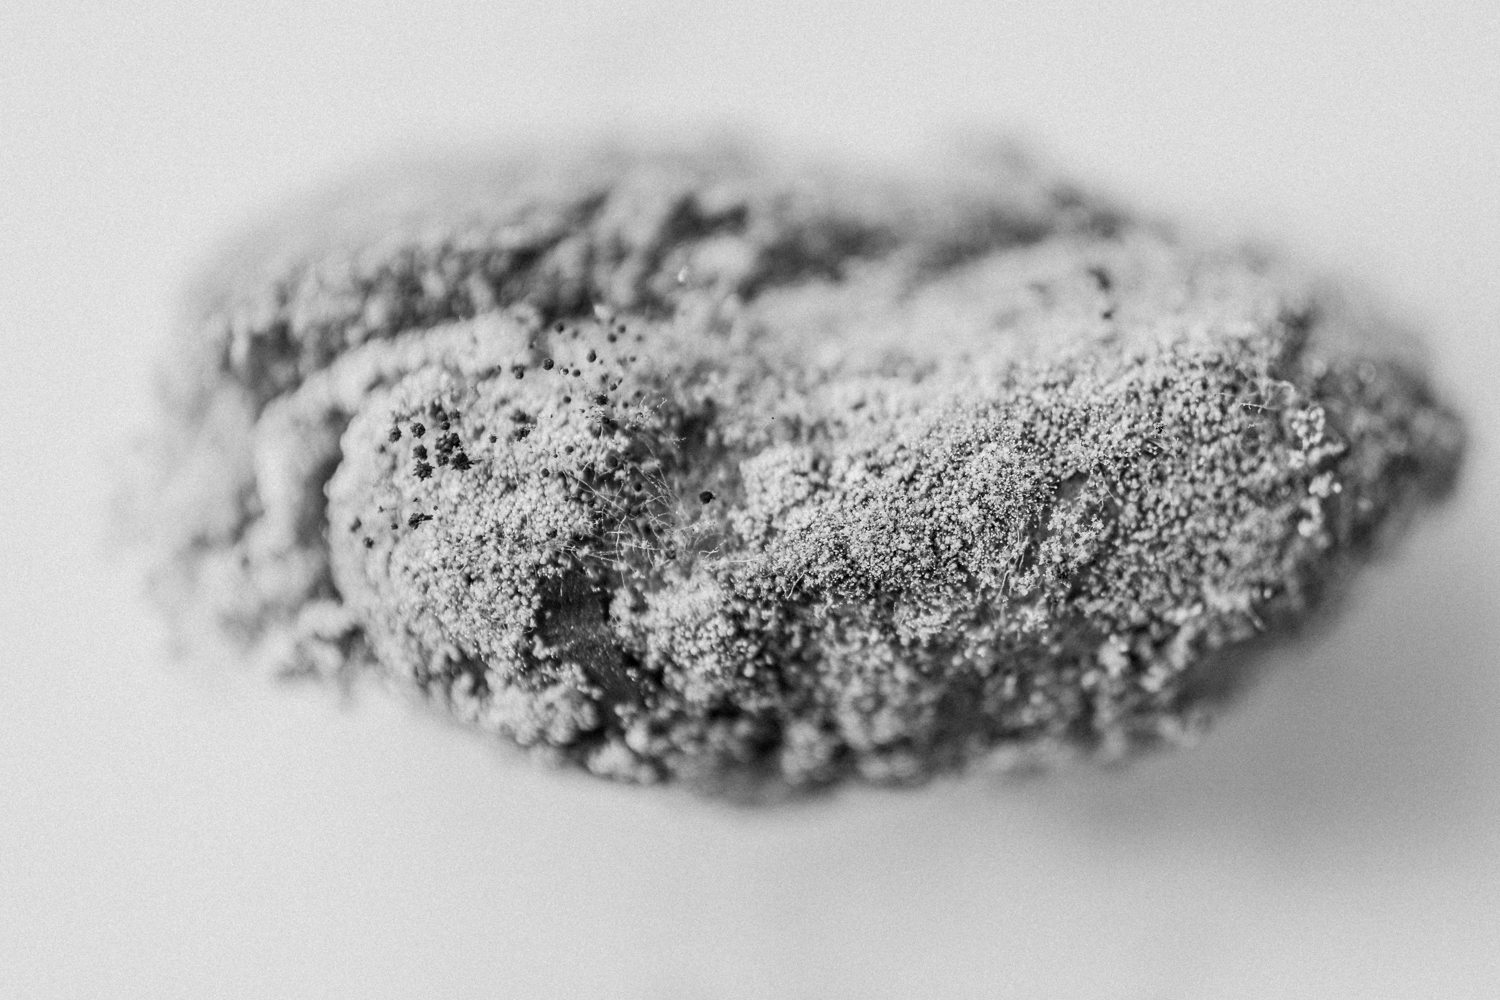 Jackfruit seeds with fuzzy mold fine art macro lens photos